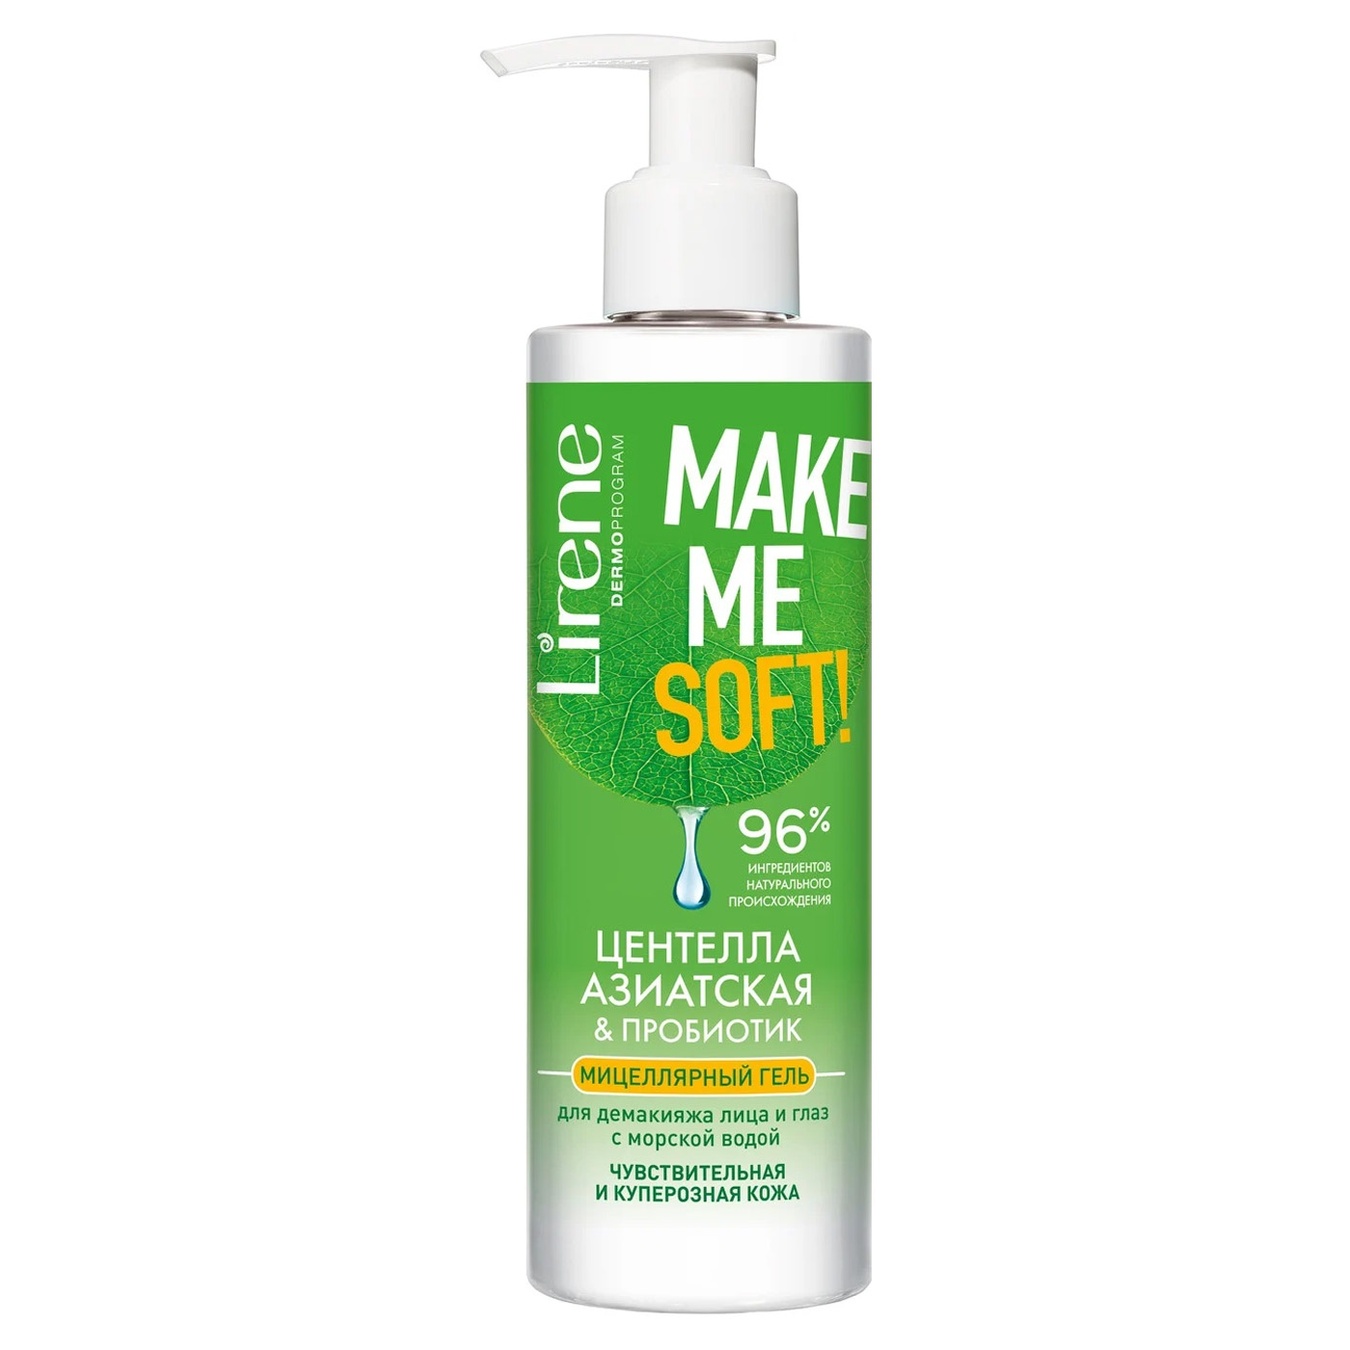 Lirene micellar gel for makeup removal 190 ml